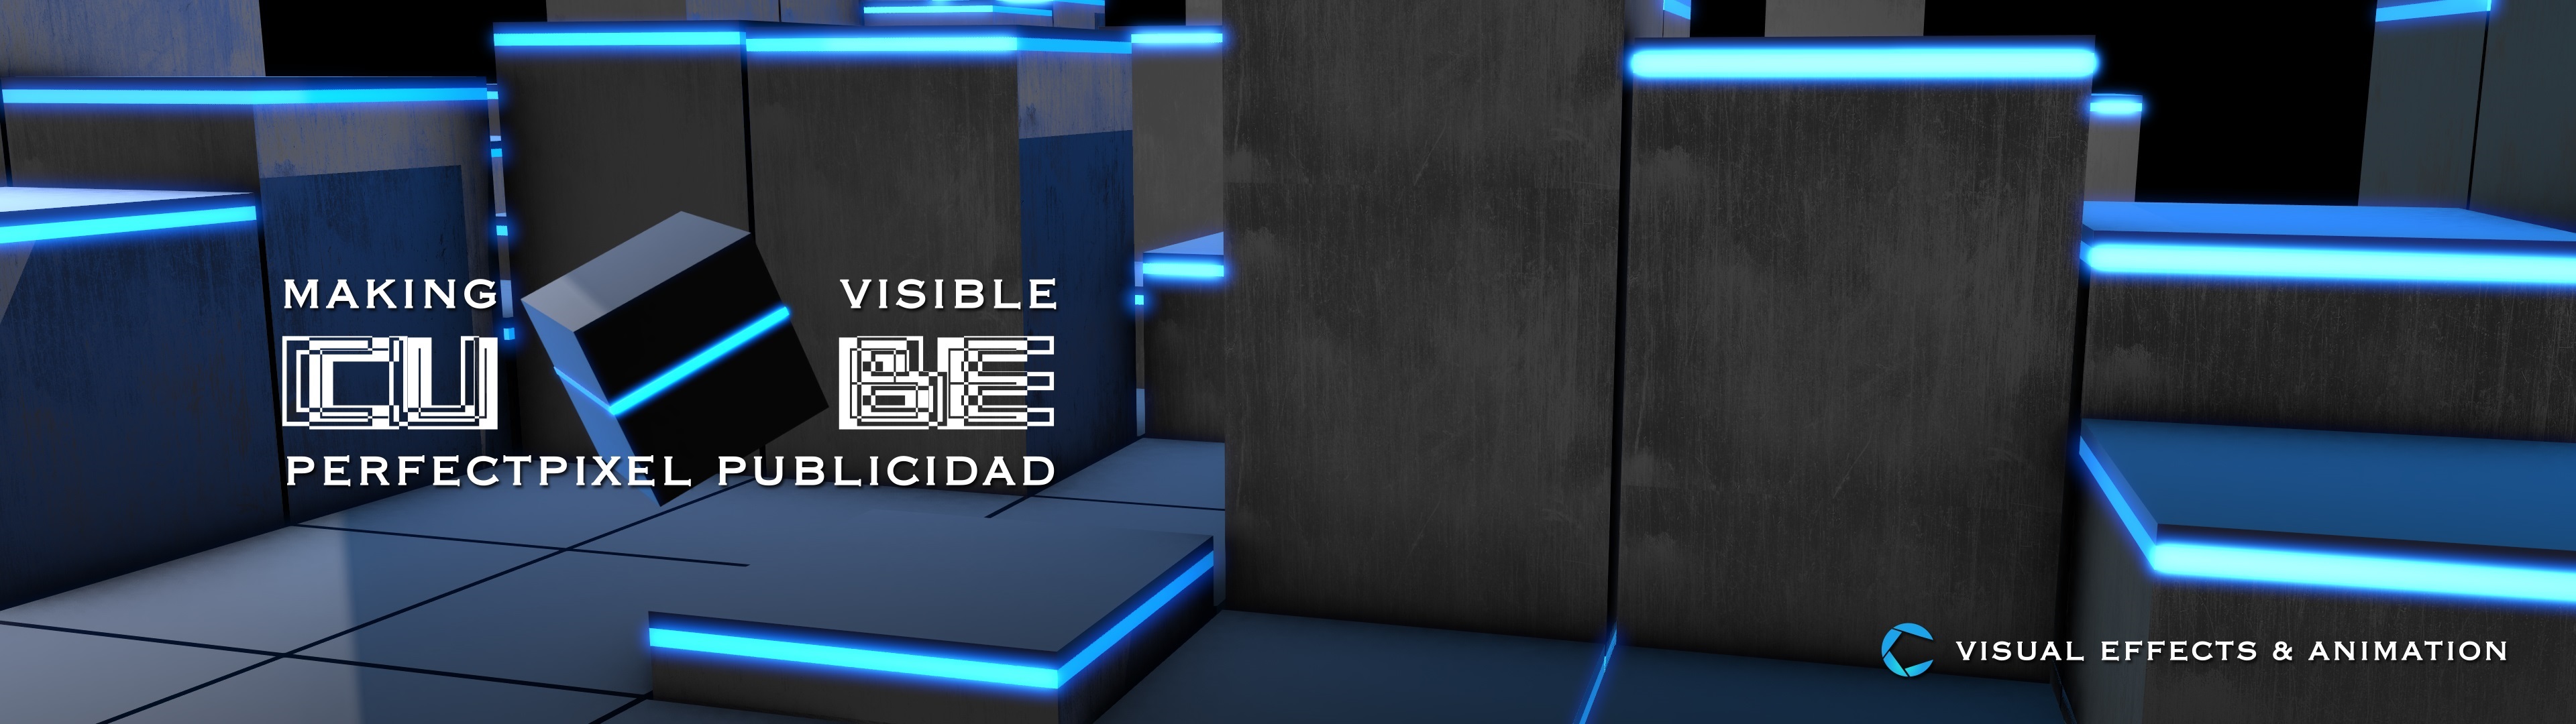 https://www.perfectpixel.es/wp-content/uploads/2015/01/The-Cube-Making-Visible-PerfectPixel-Publicidad.jpg